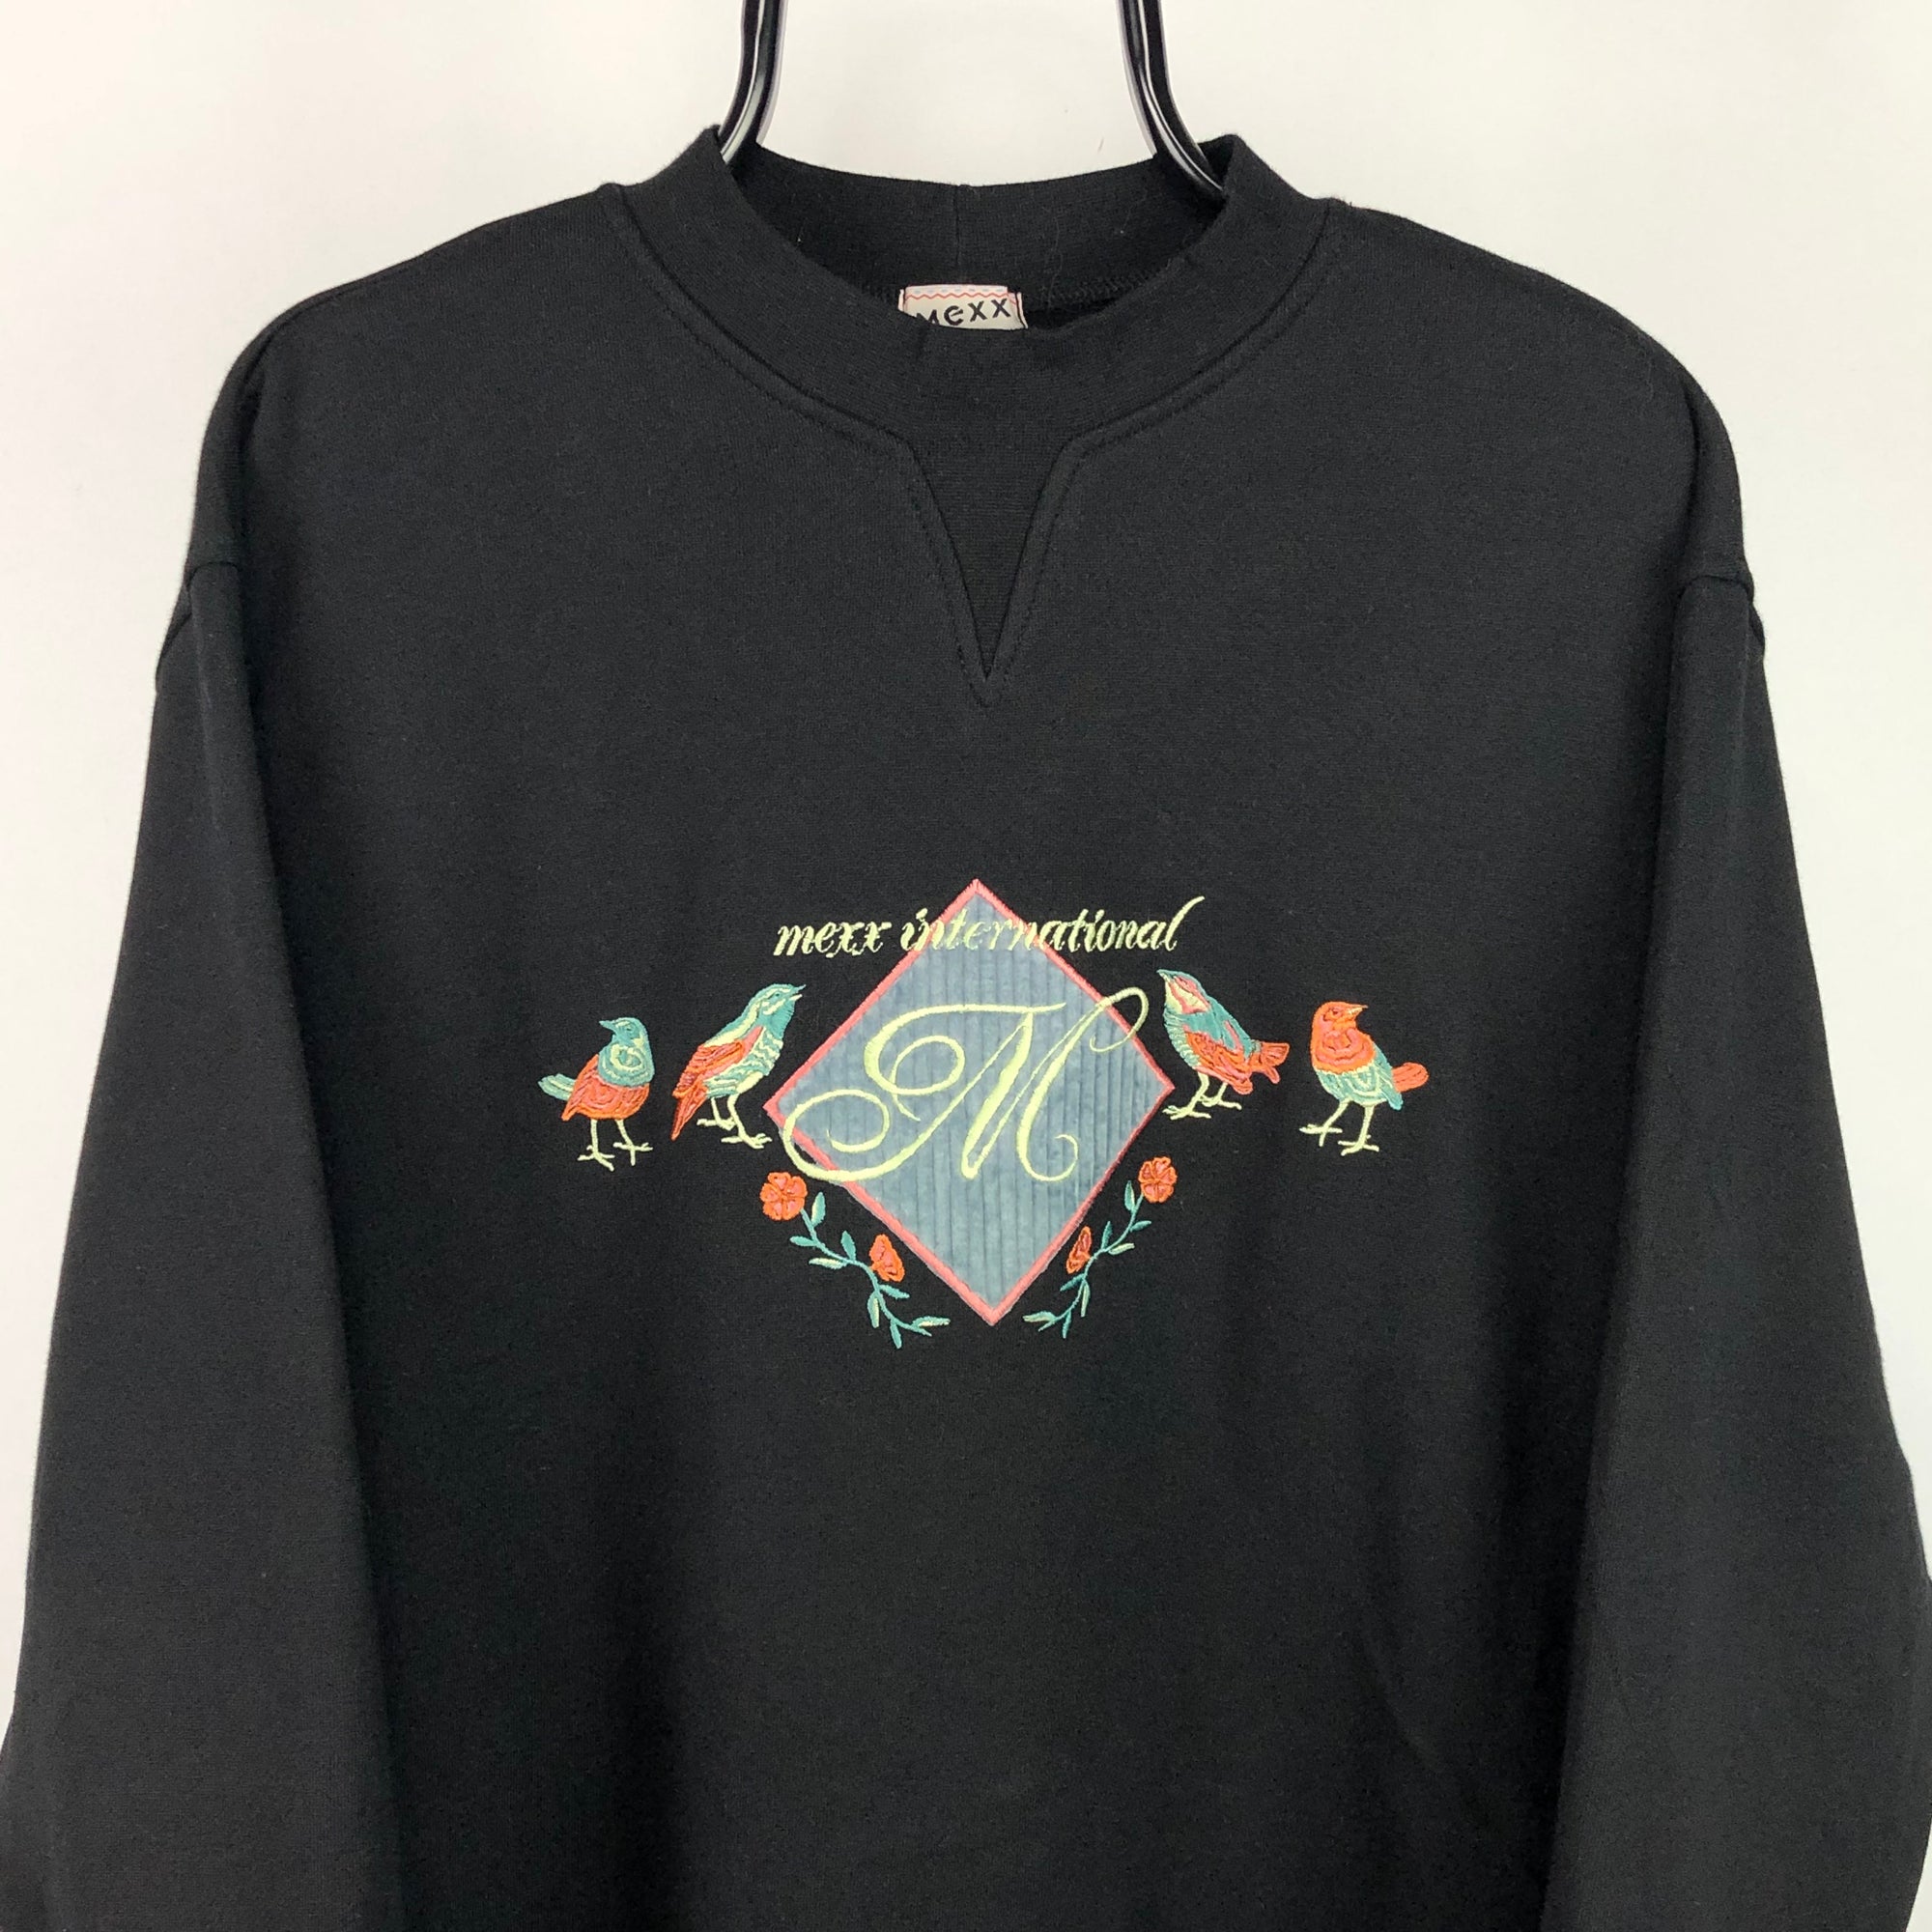 Vintage 90s Birds Embroidery Sweatshirt in Black - Men's Large/Women's XL